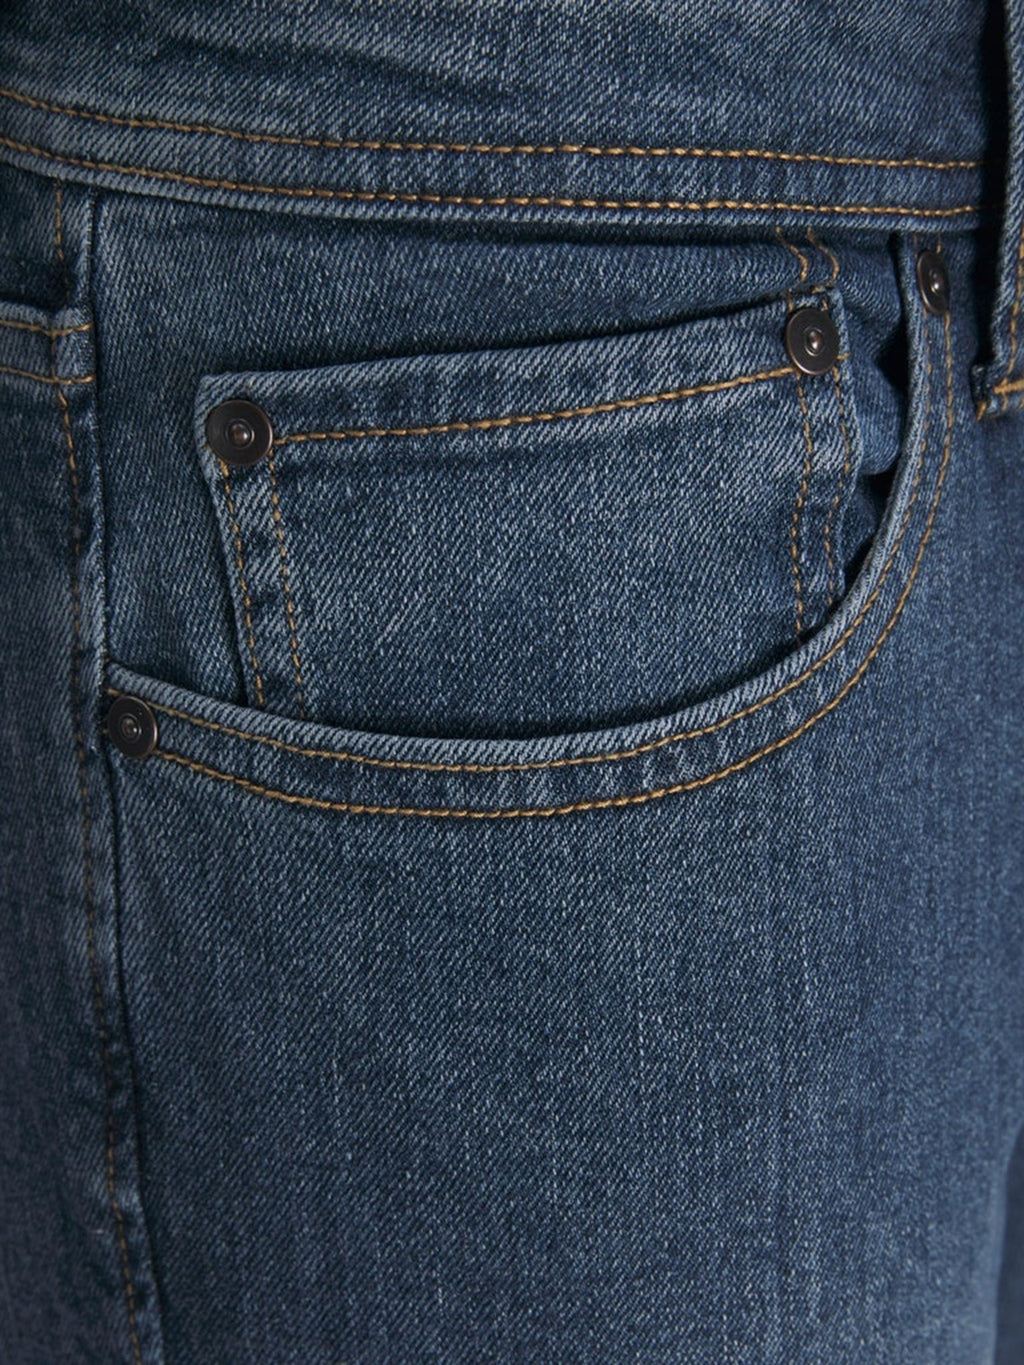 Performance Jeans (Slim) - Medium Blue Denim